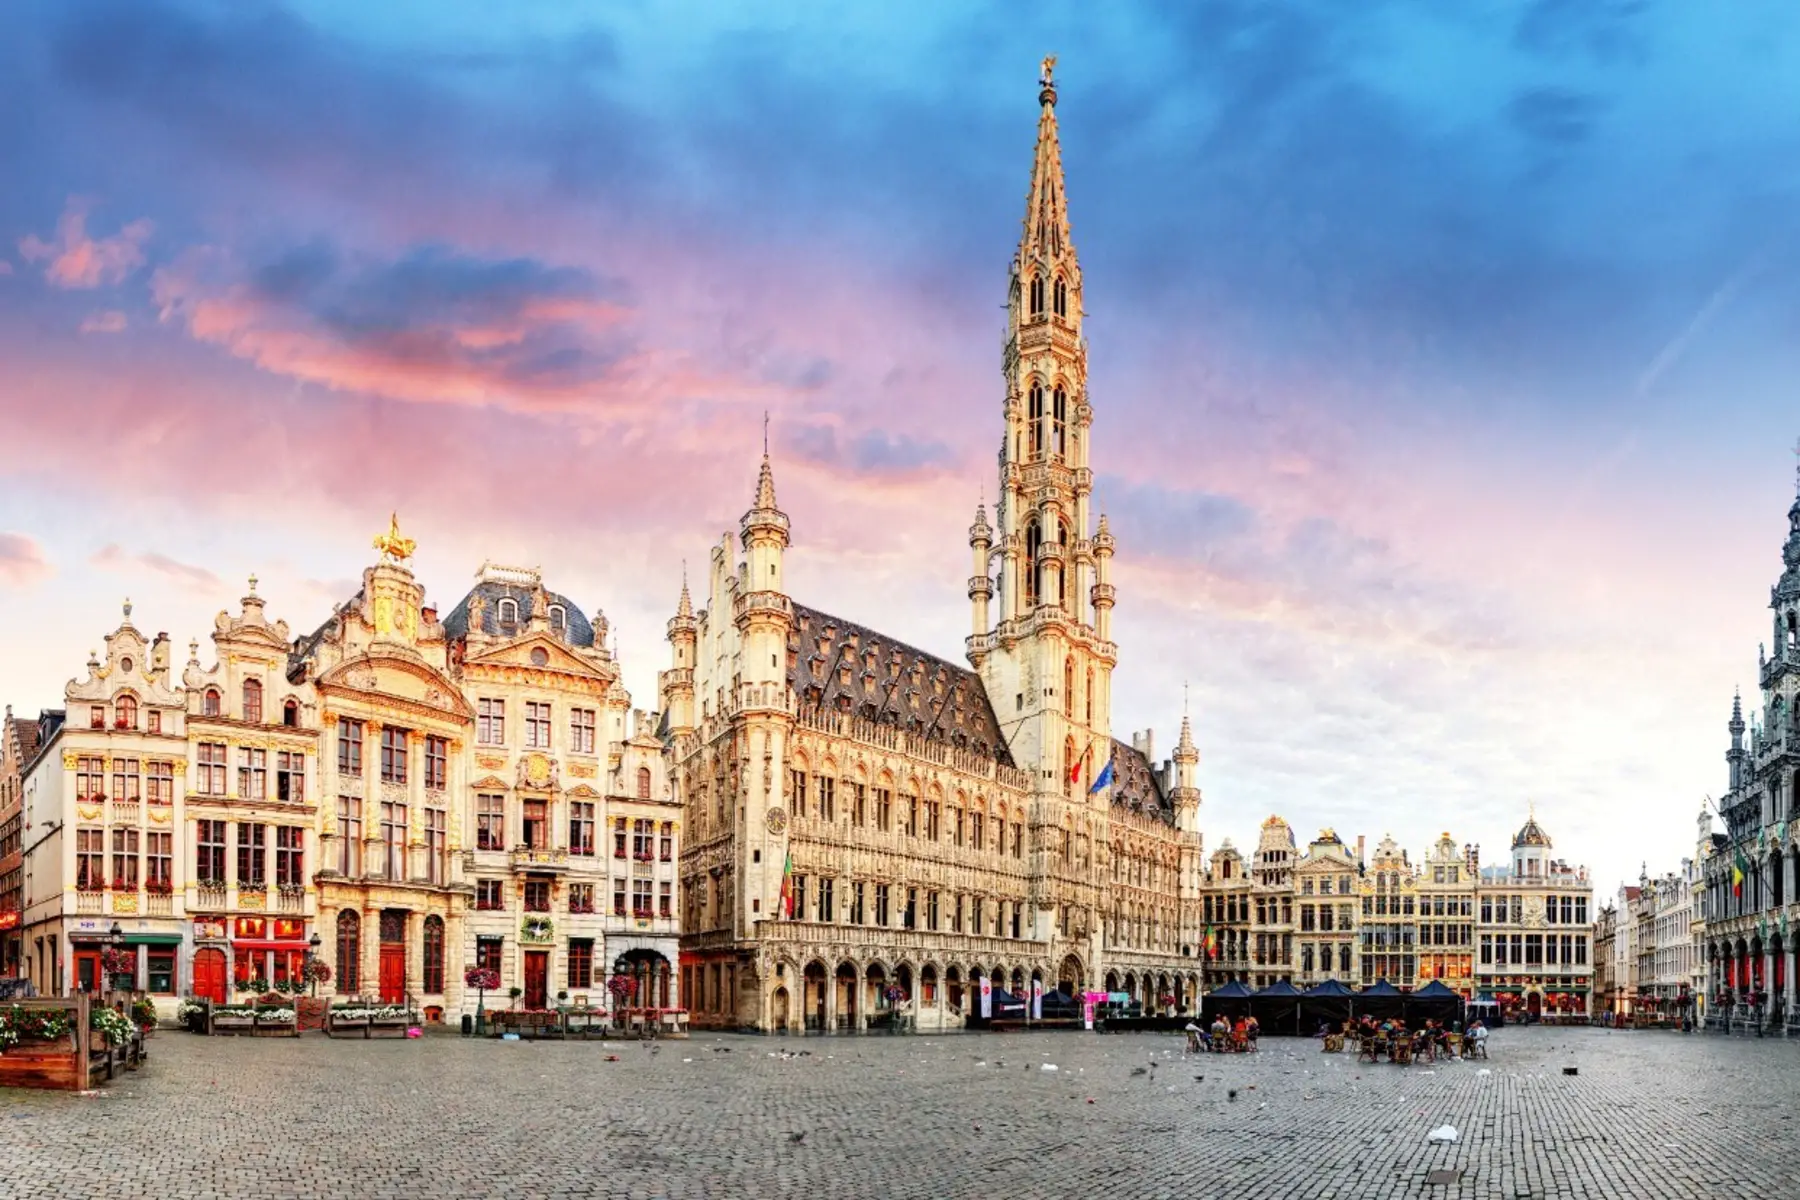 deserted city square in ornate Belgian city